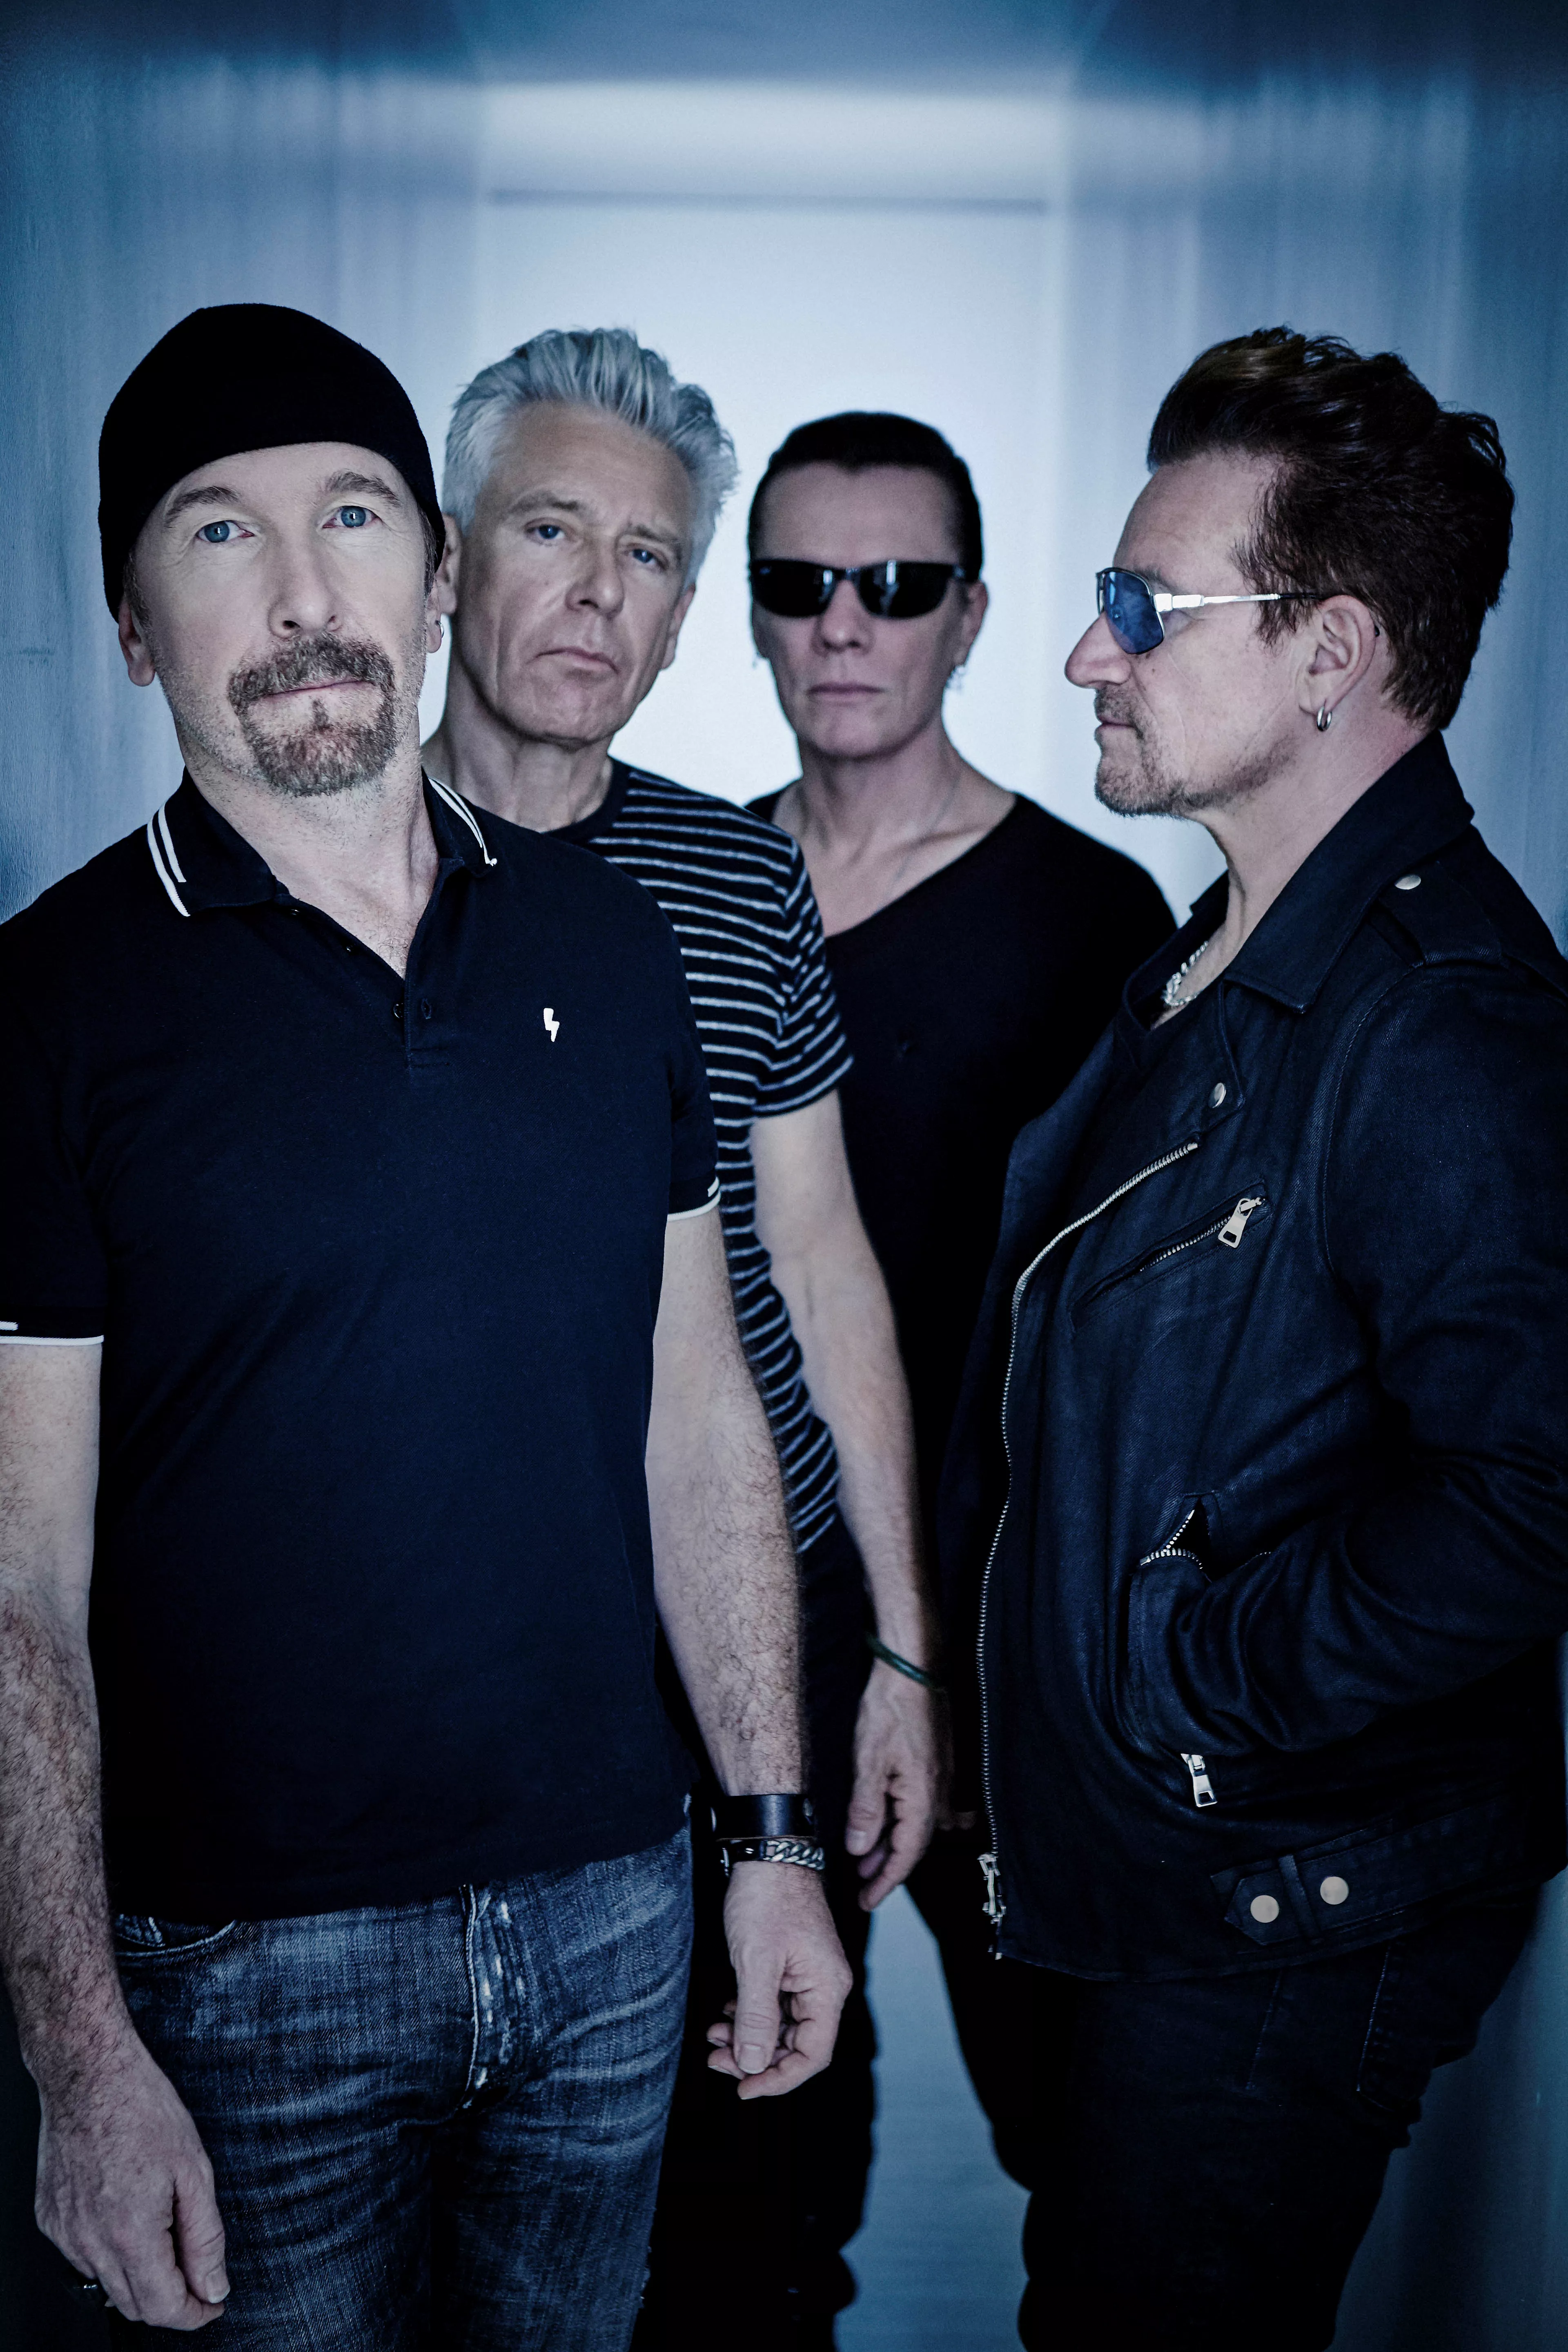 ANMELDELSE: Fordums styrke får luft hos rockprædikanten Bono